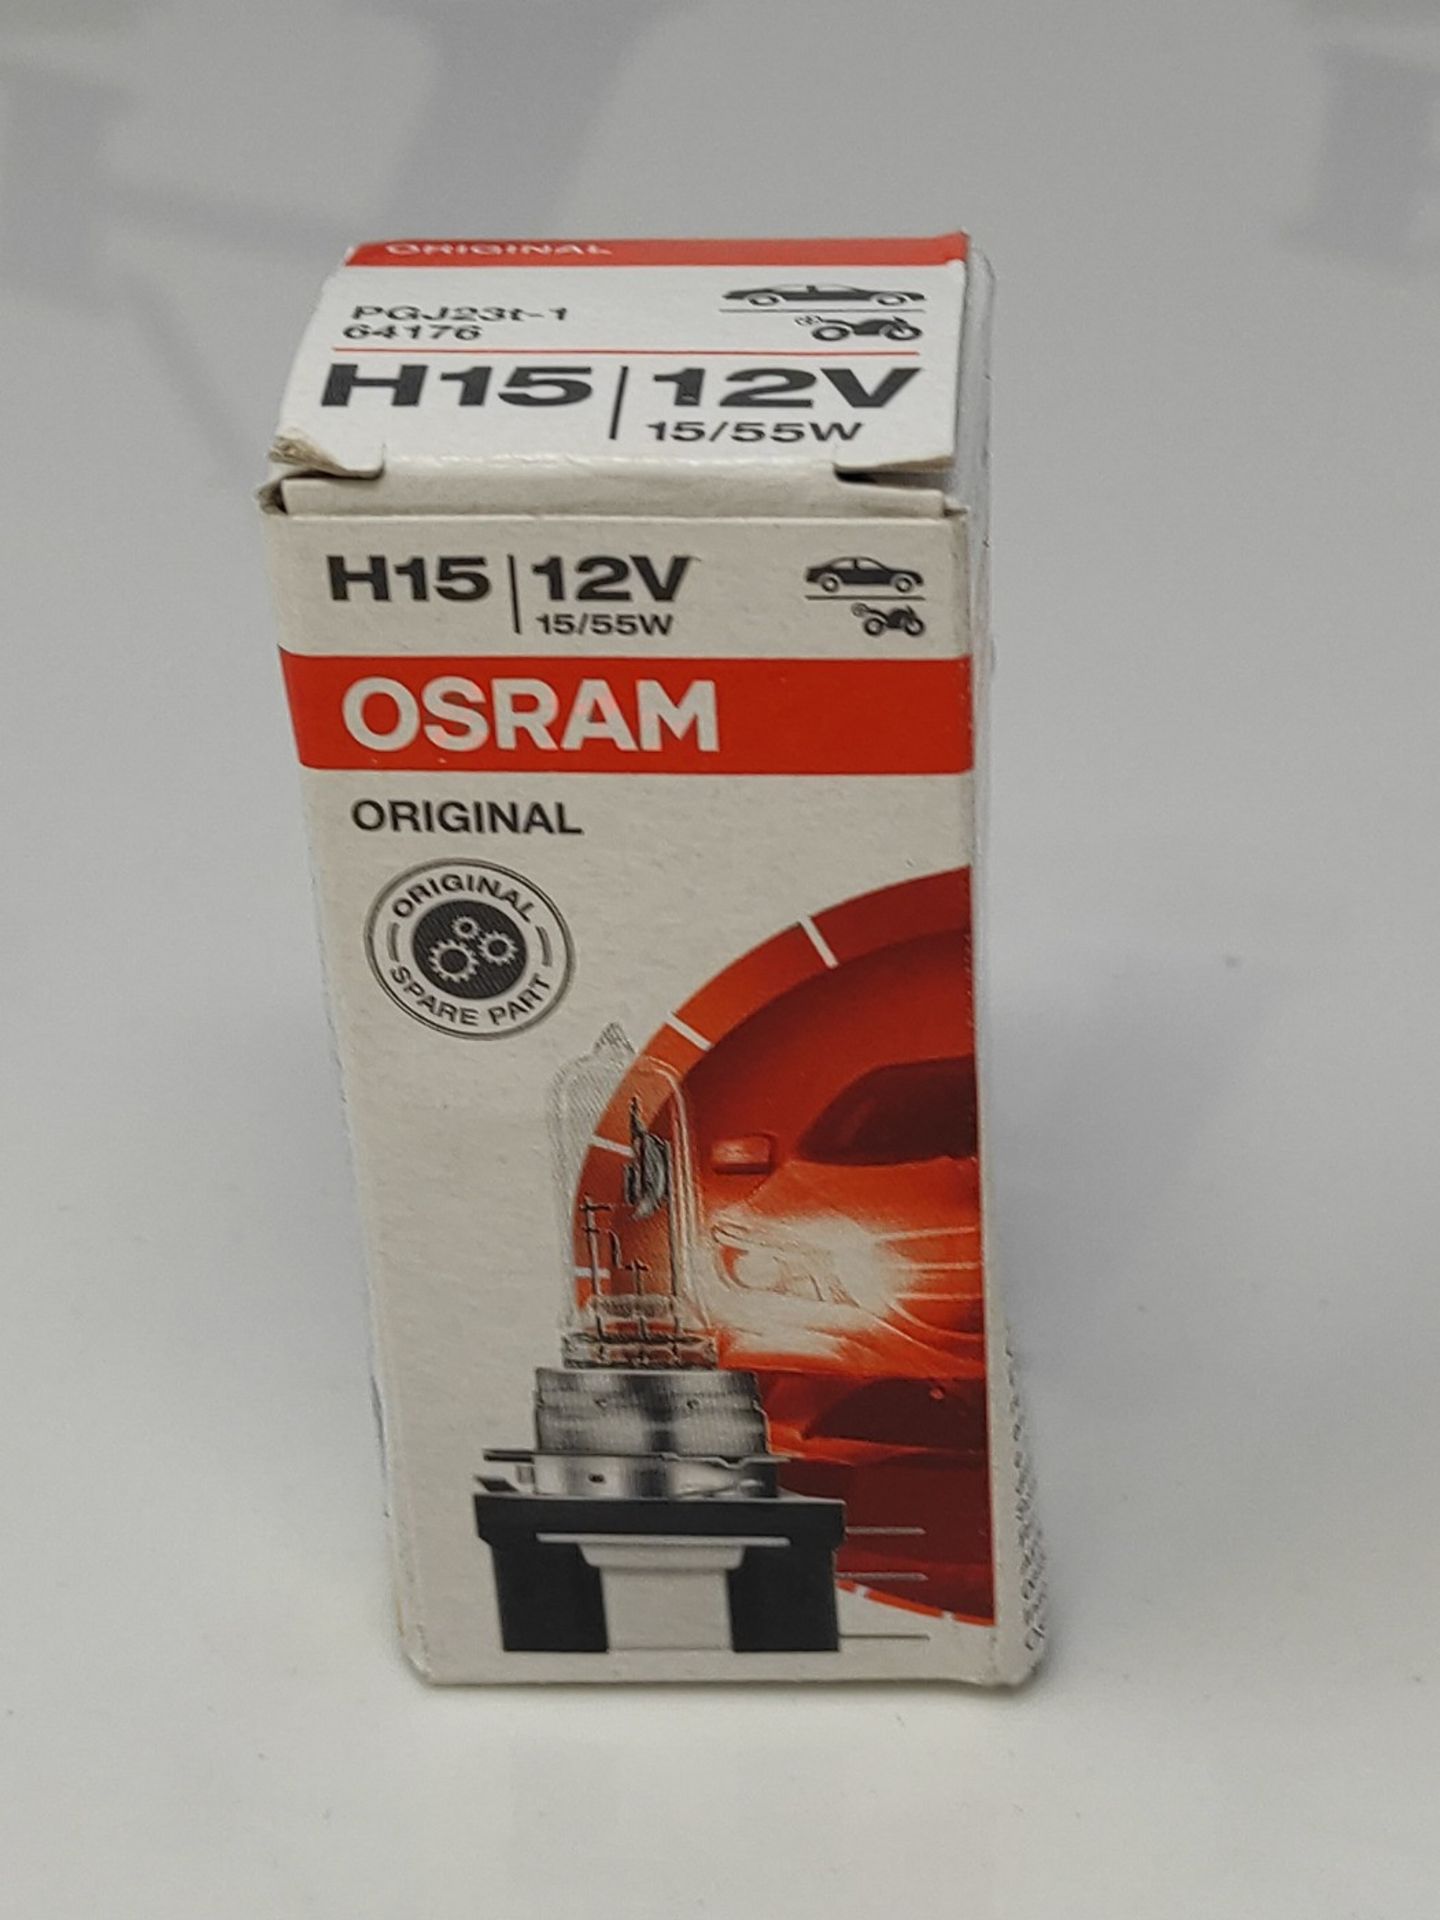 OSRAM Original 12V H15 halogen headlamp bulb 64176 1 piece in box - Image 3 of 3